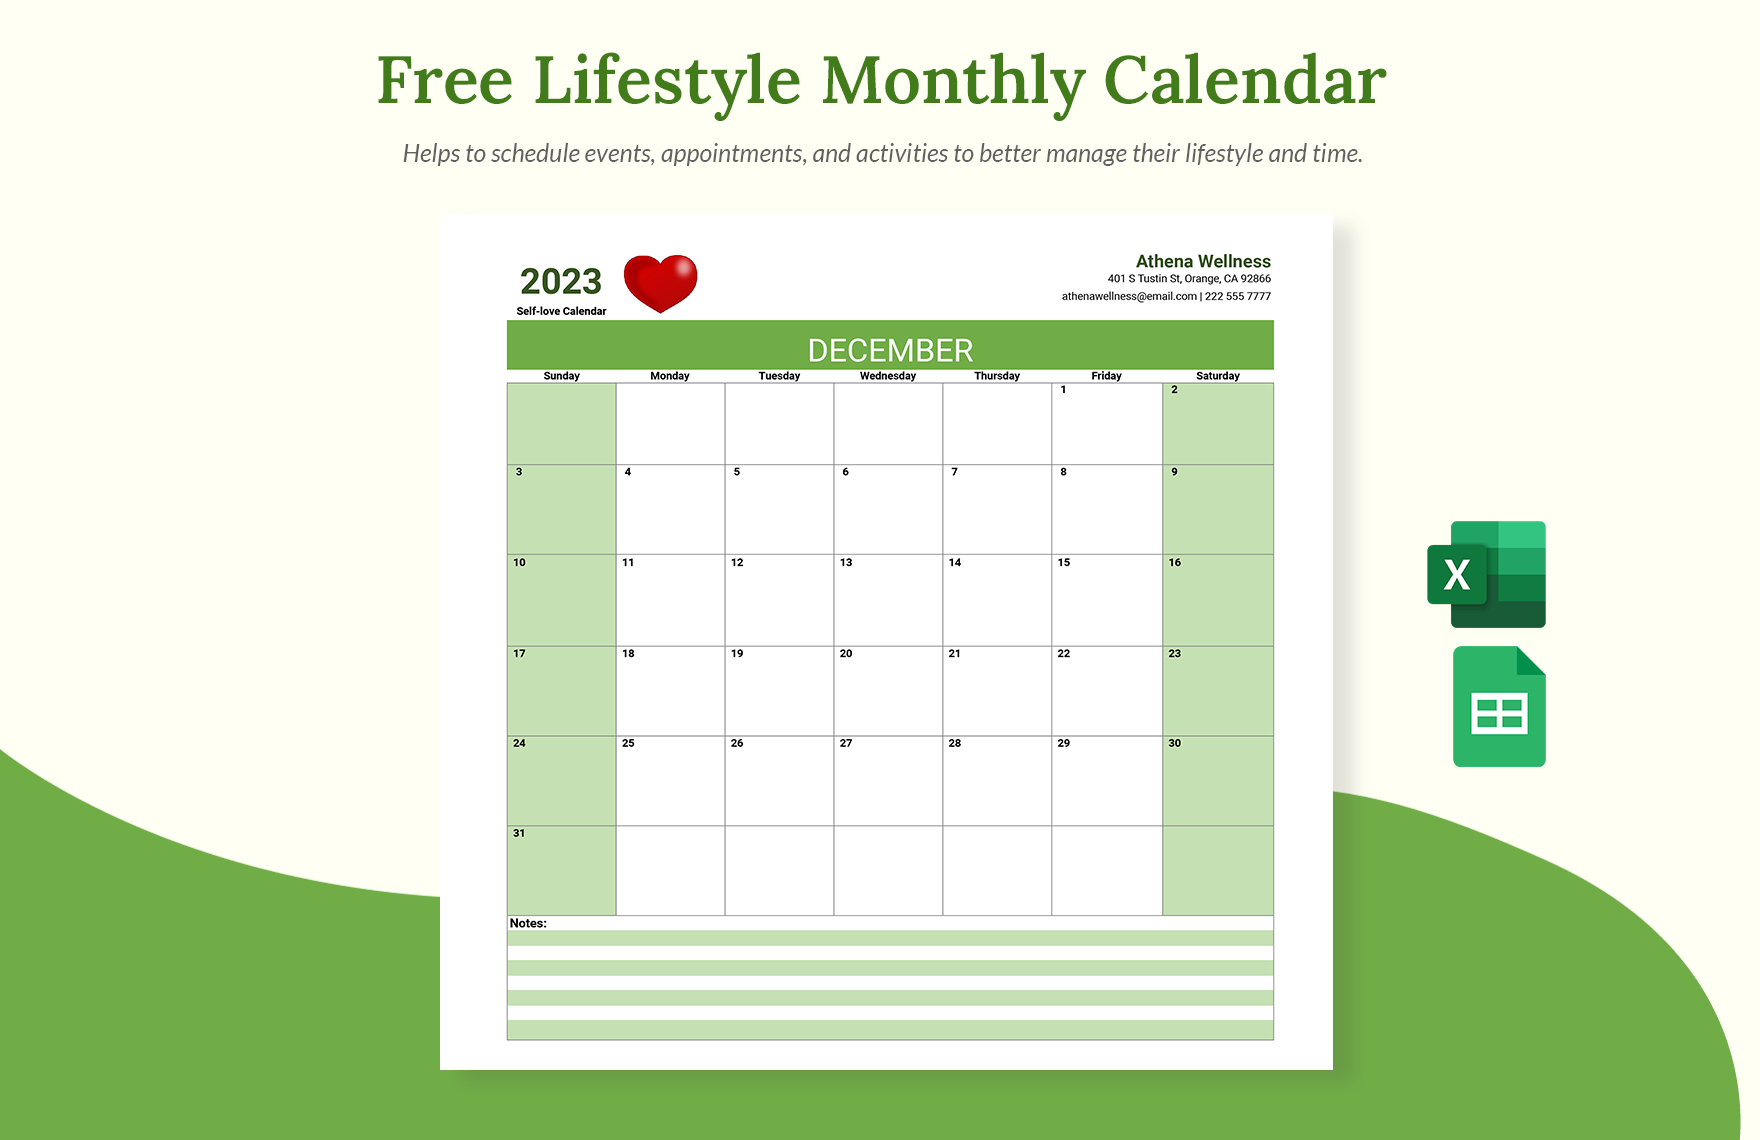 Free Lifestyle Monthly Calendar